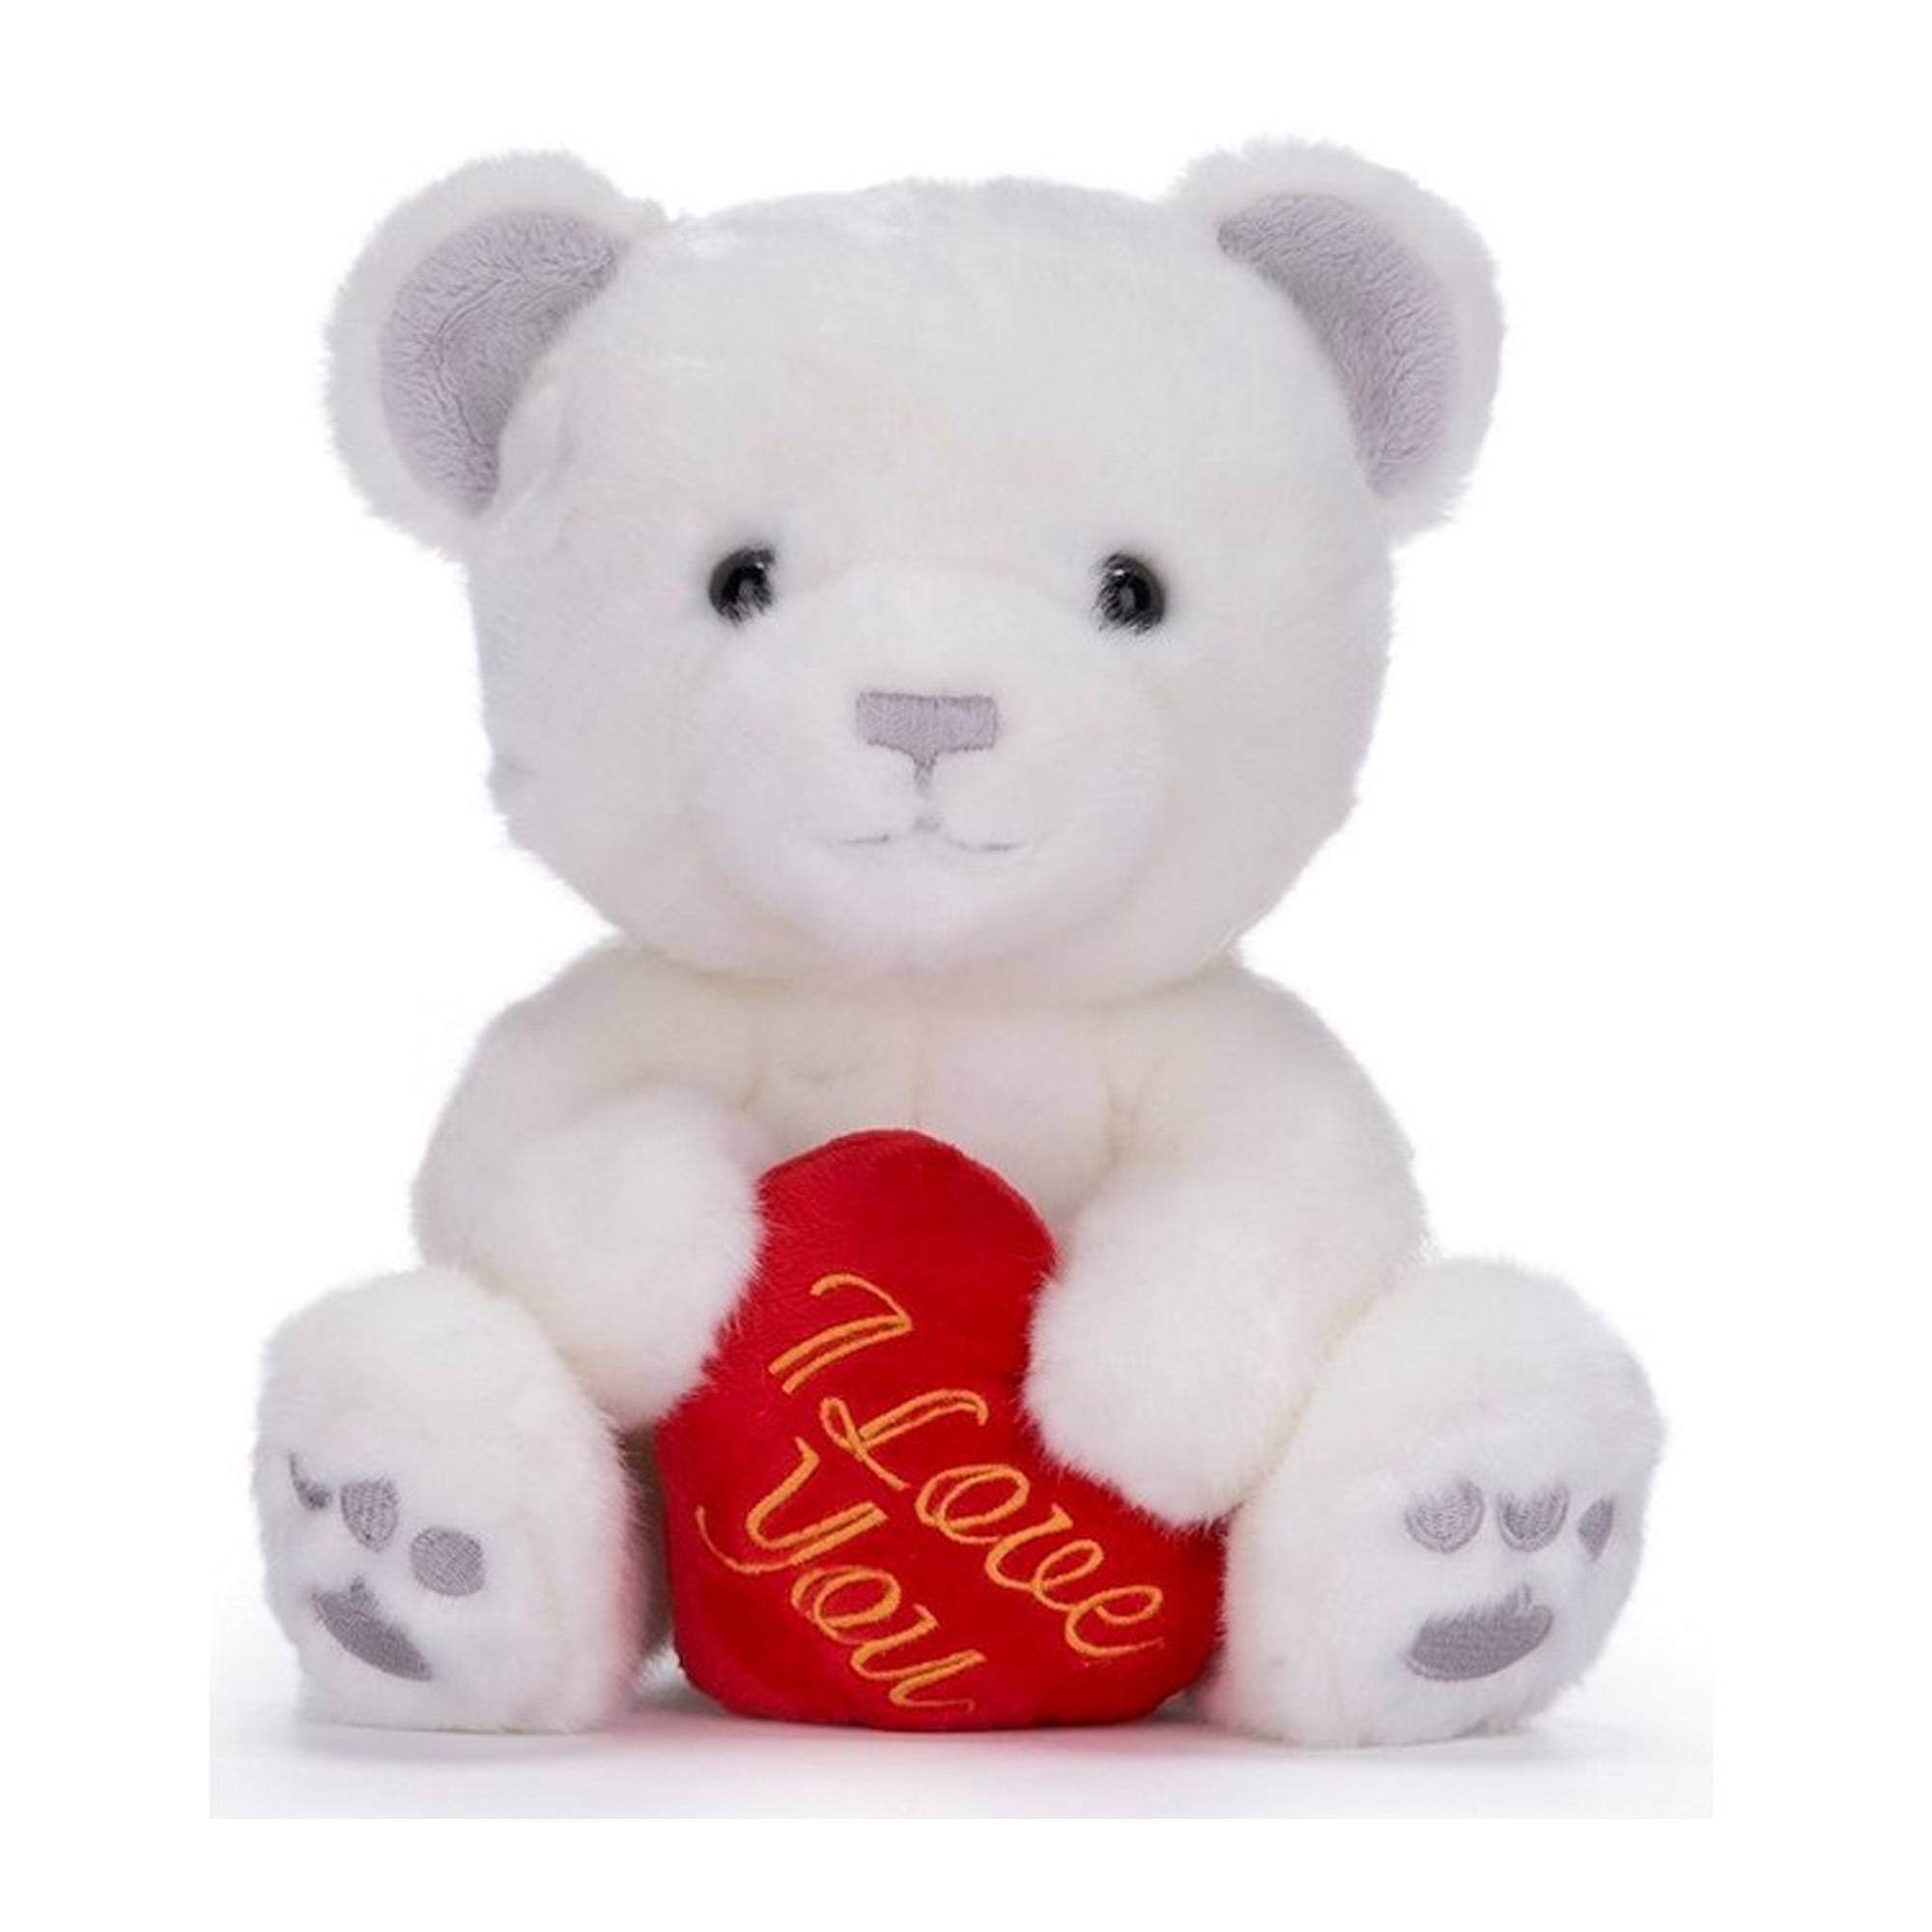 Valentijn I Love You knuffel beertje zachte pluche rood hartje cadeau 22 cm wit